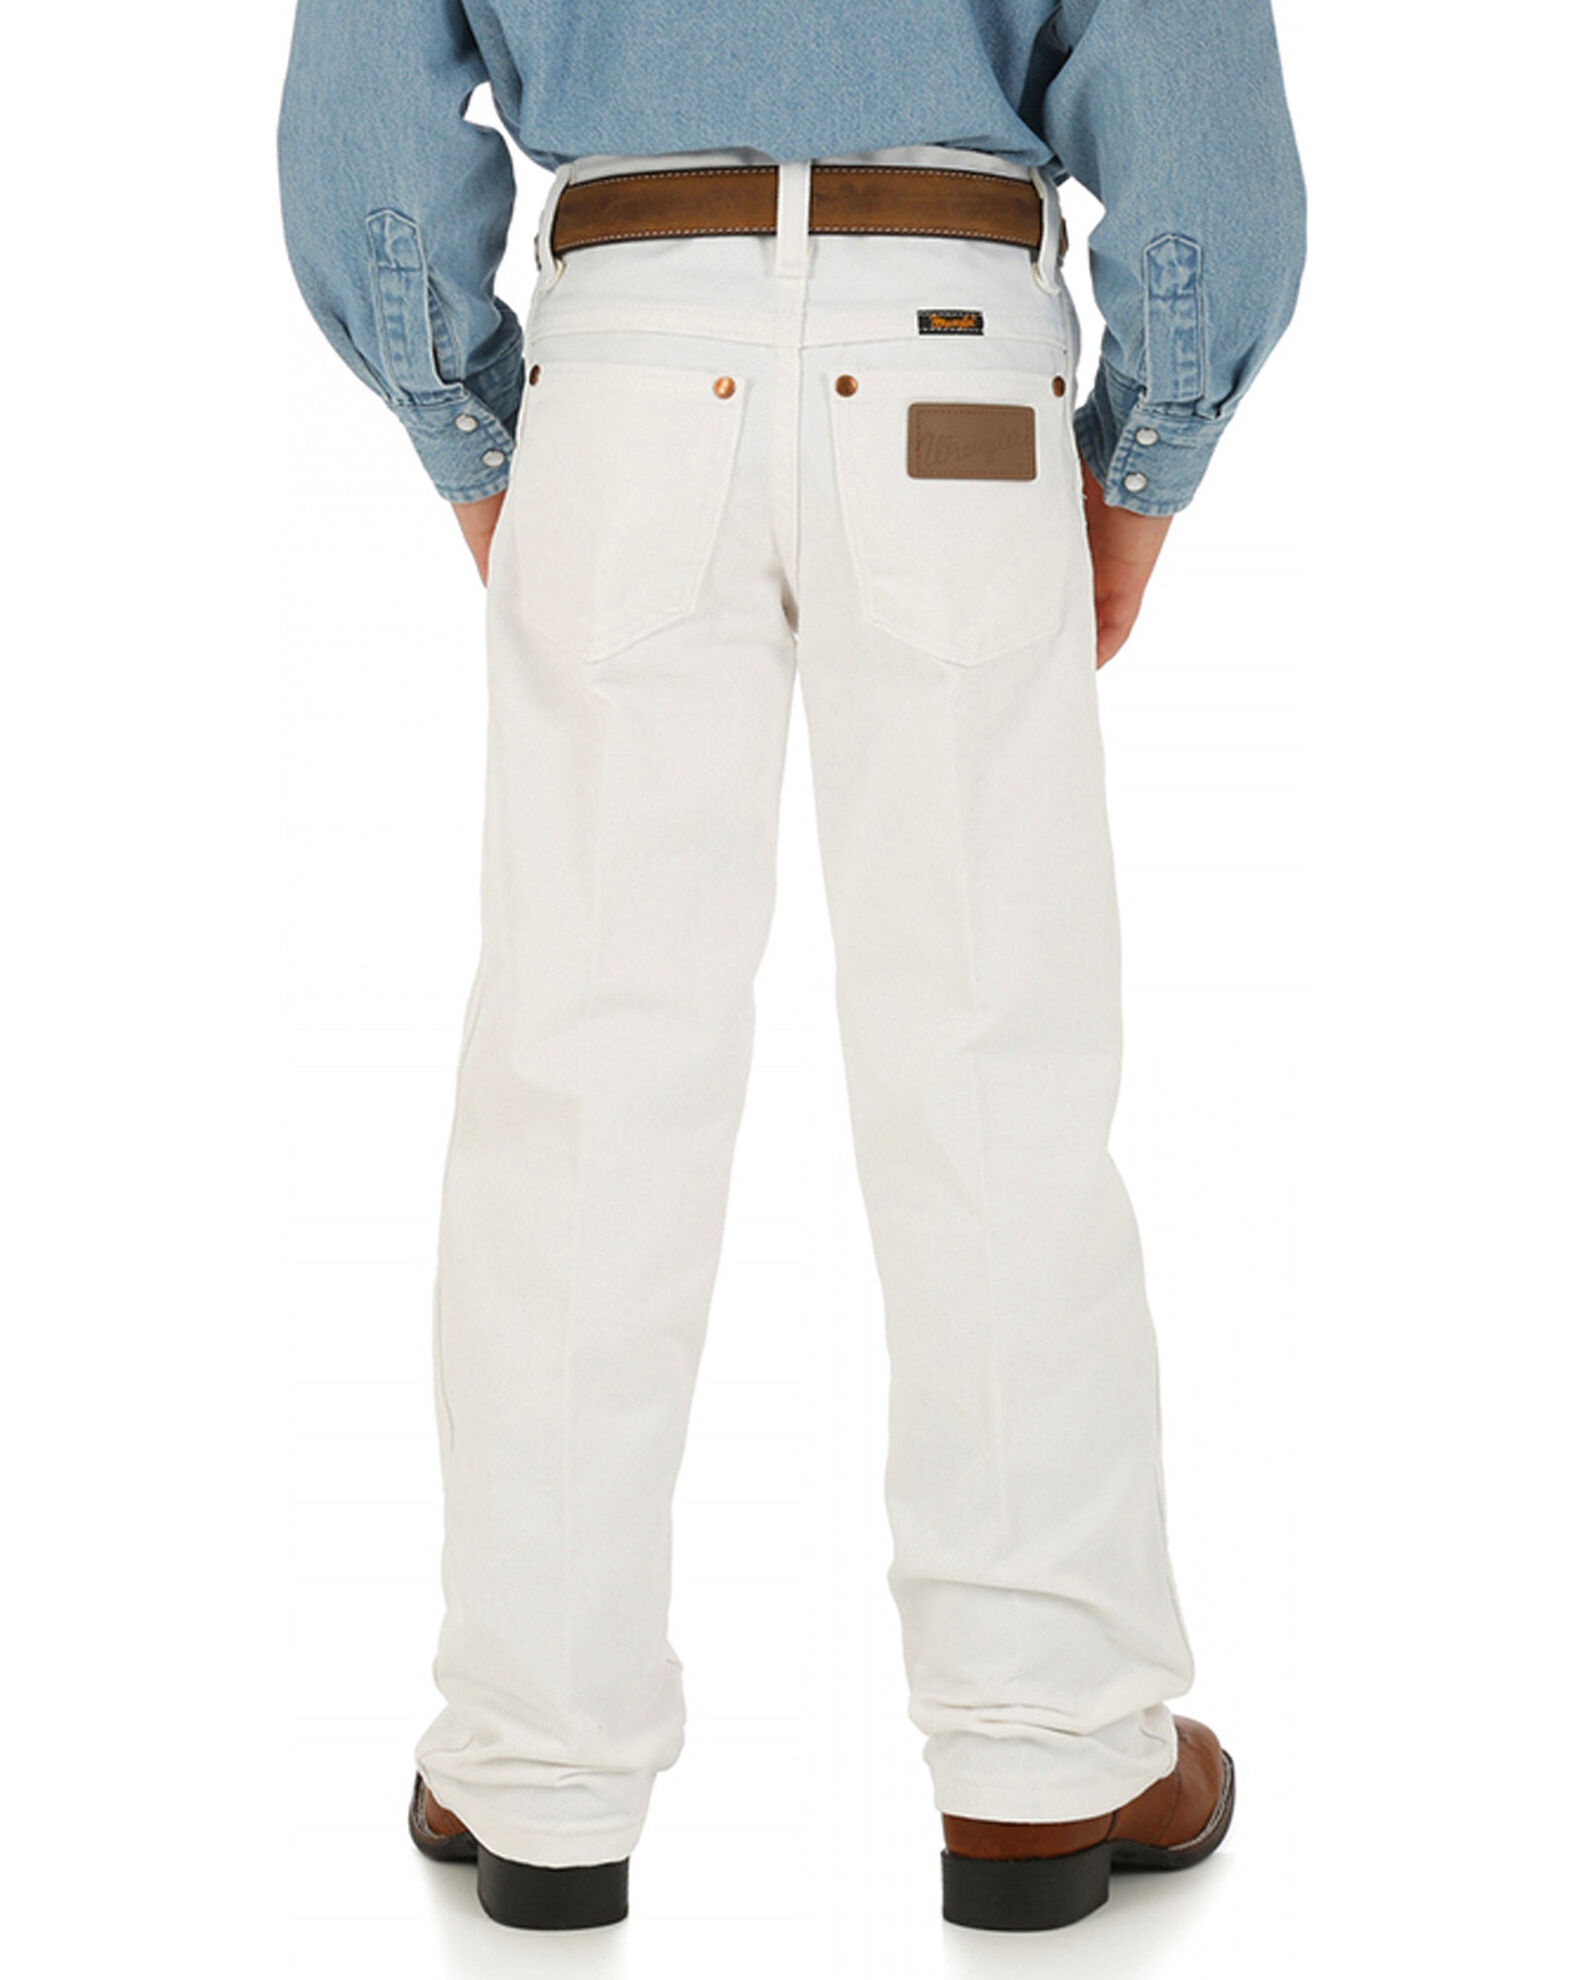 Wrangler Boys' 13MWB Original Cowboy Cut Jeans - Country Outfitter